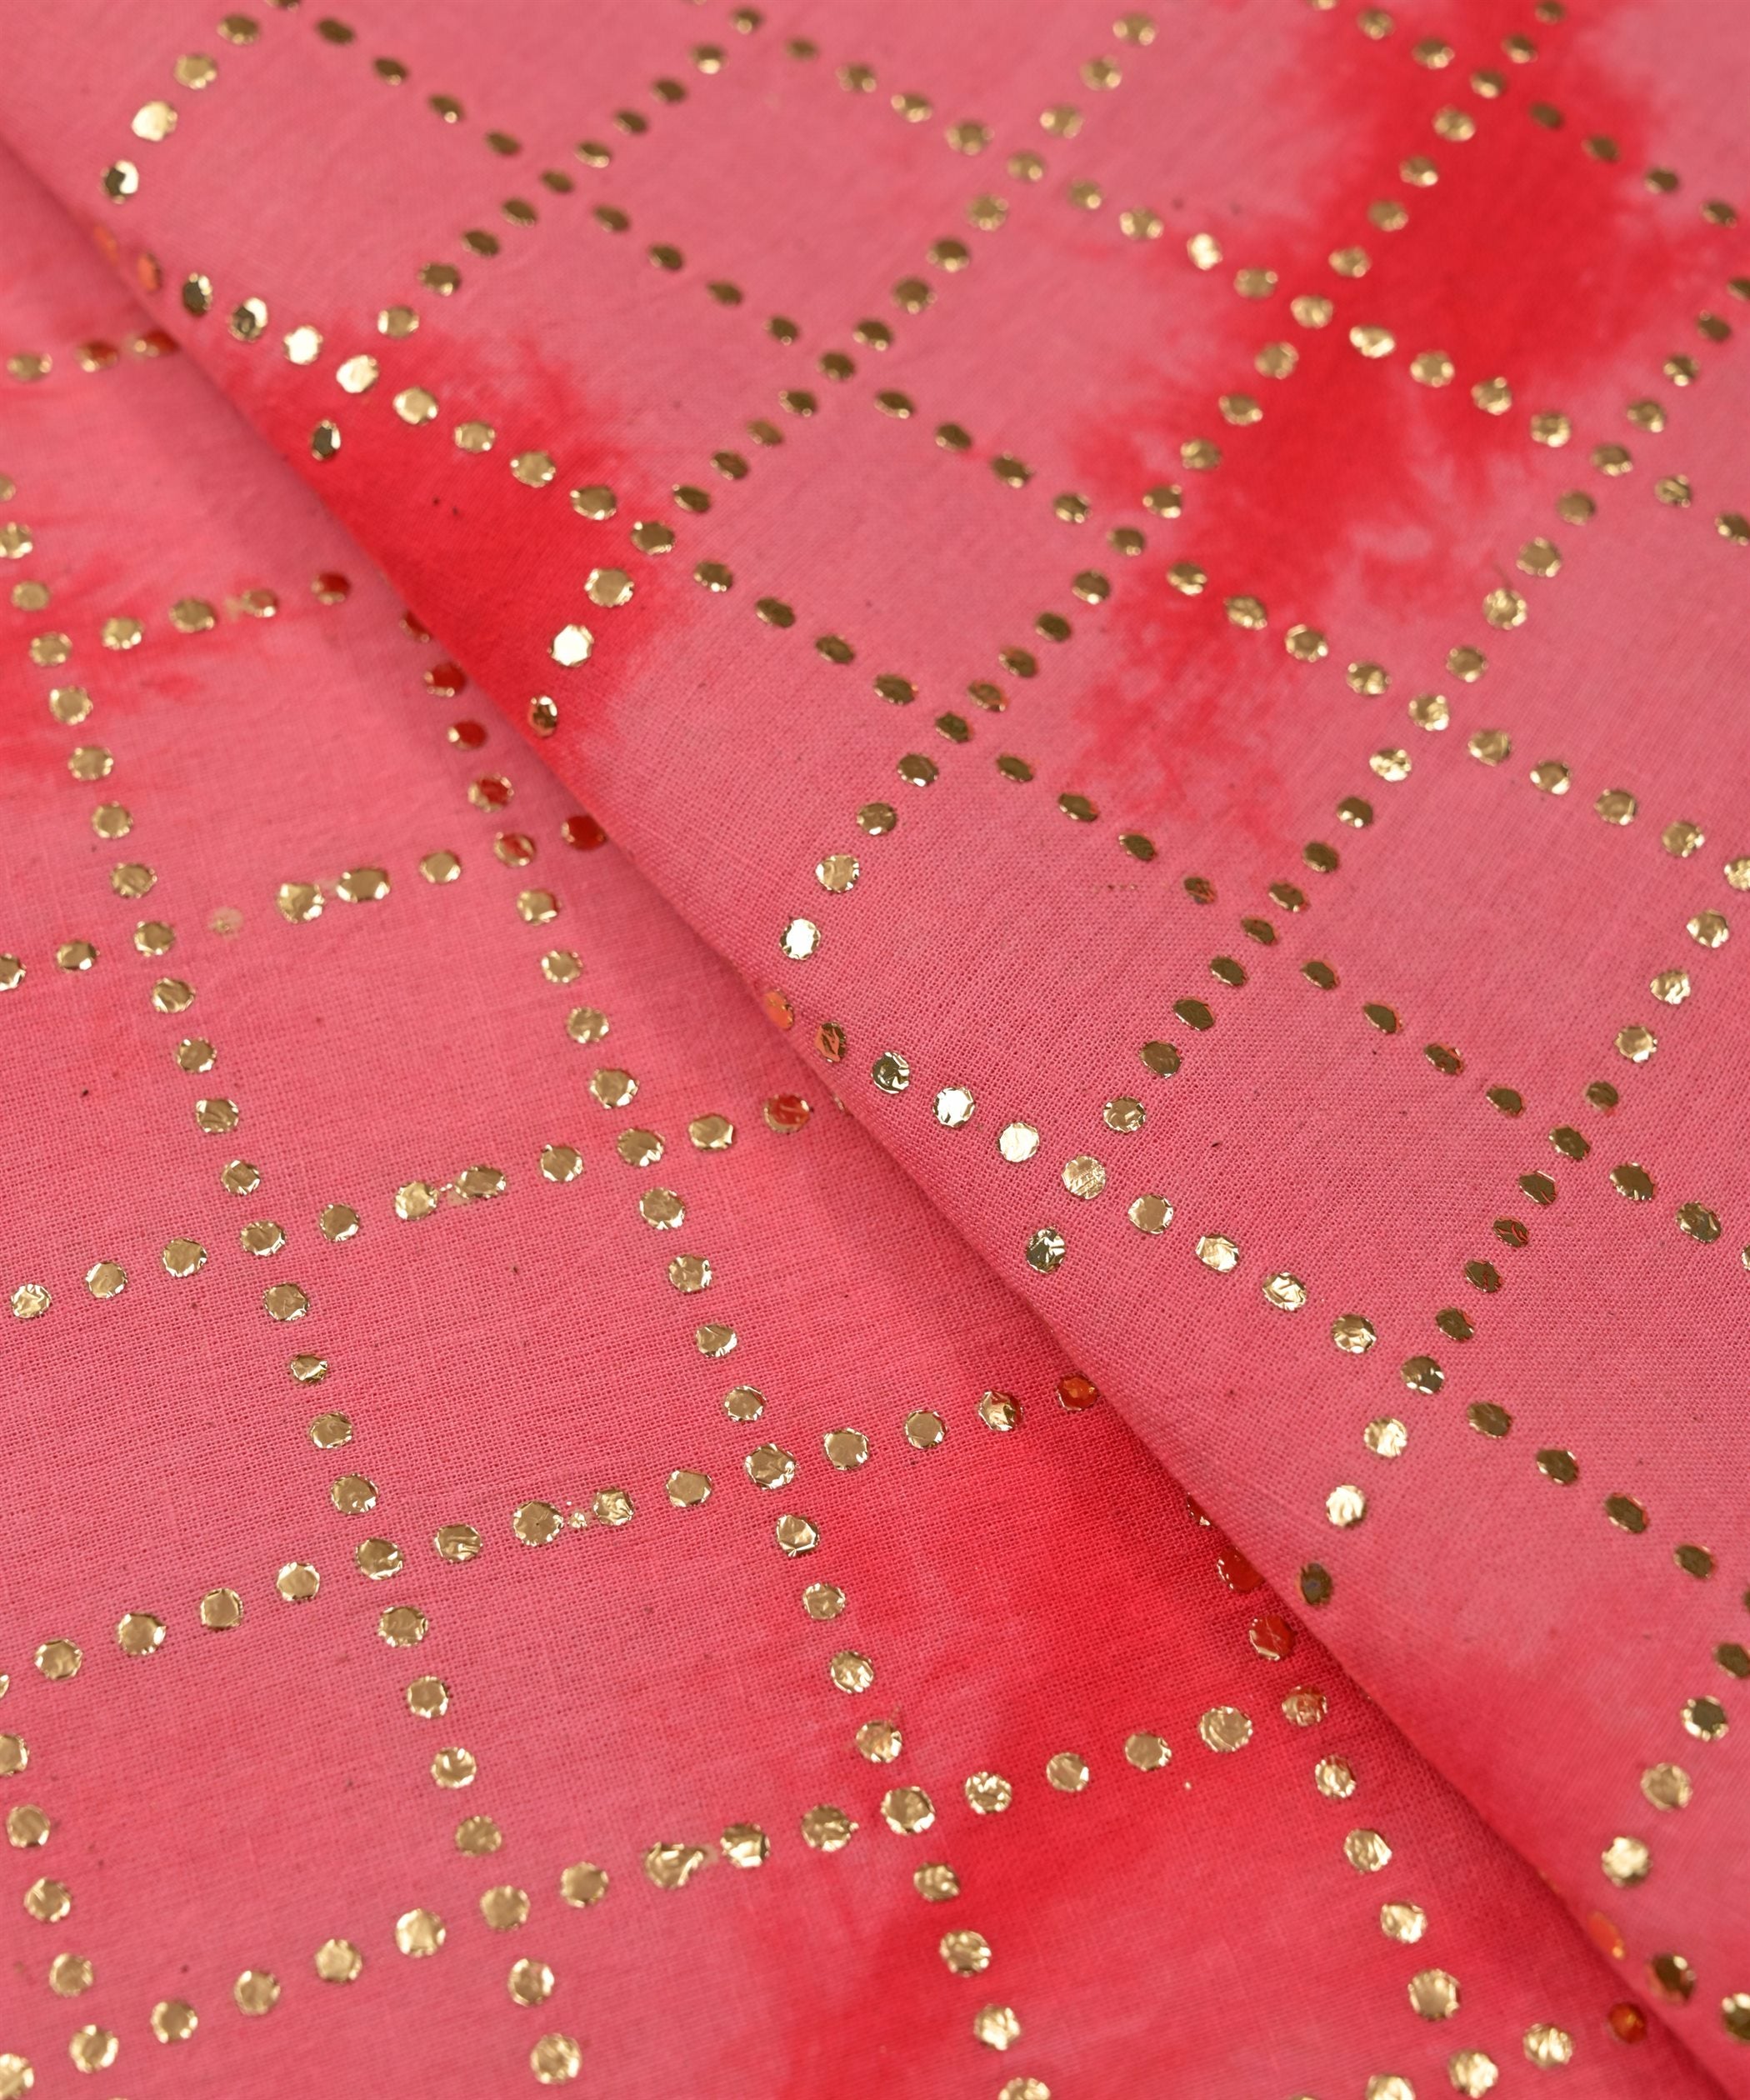 Hot pink Shibori print on Mal cotton Fabric with Checks Mukaish work